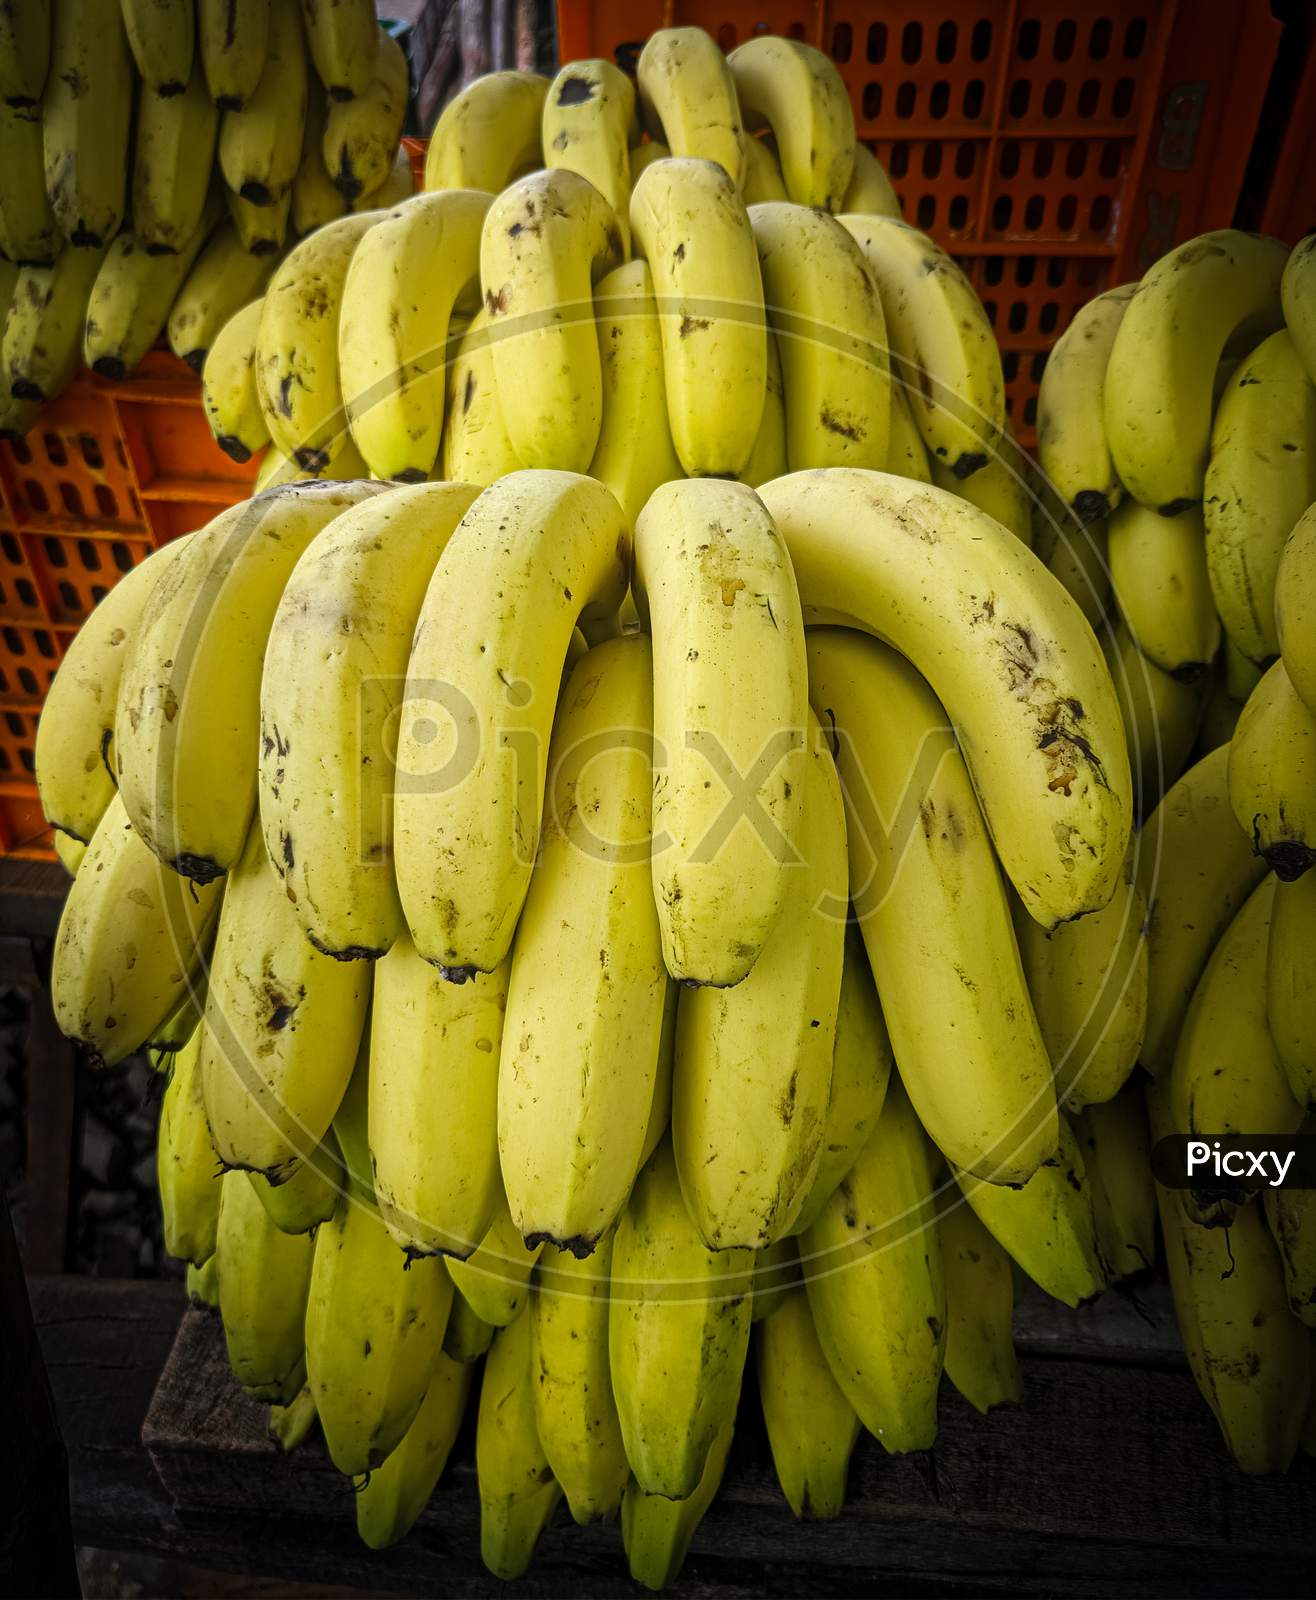 Bunch of fresh bananas in the market